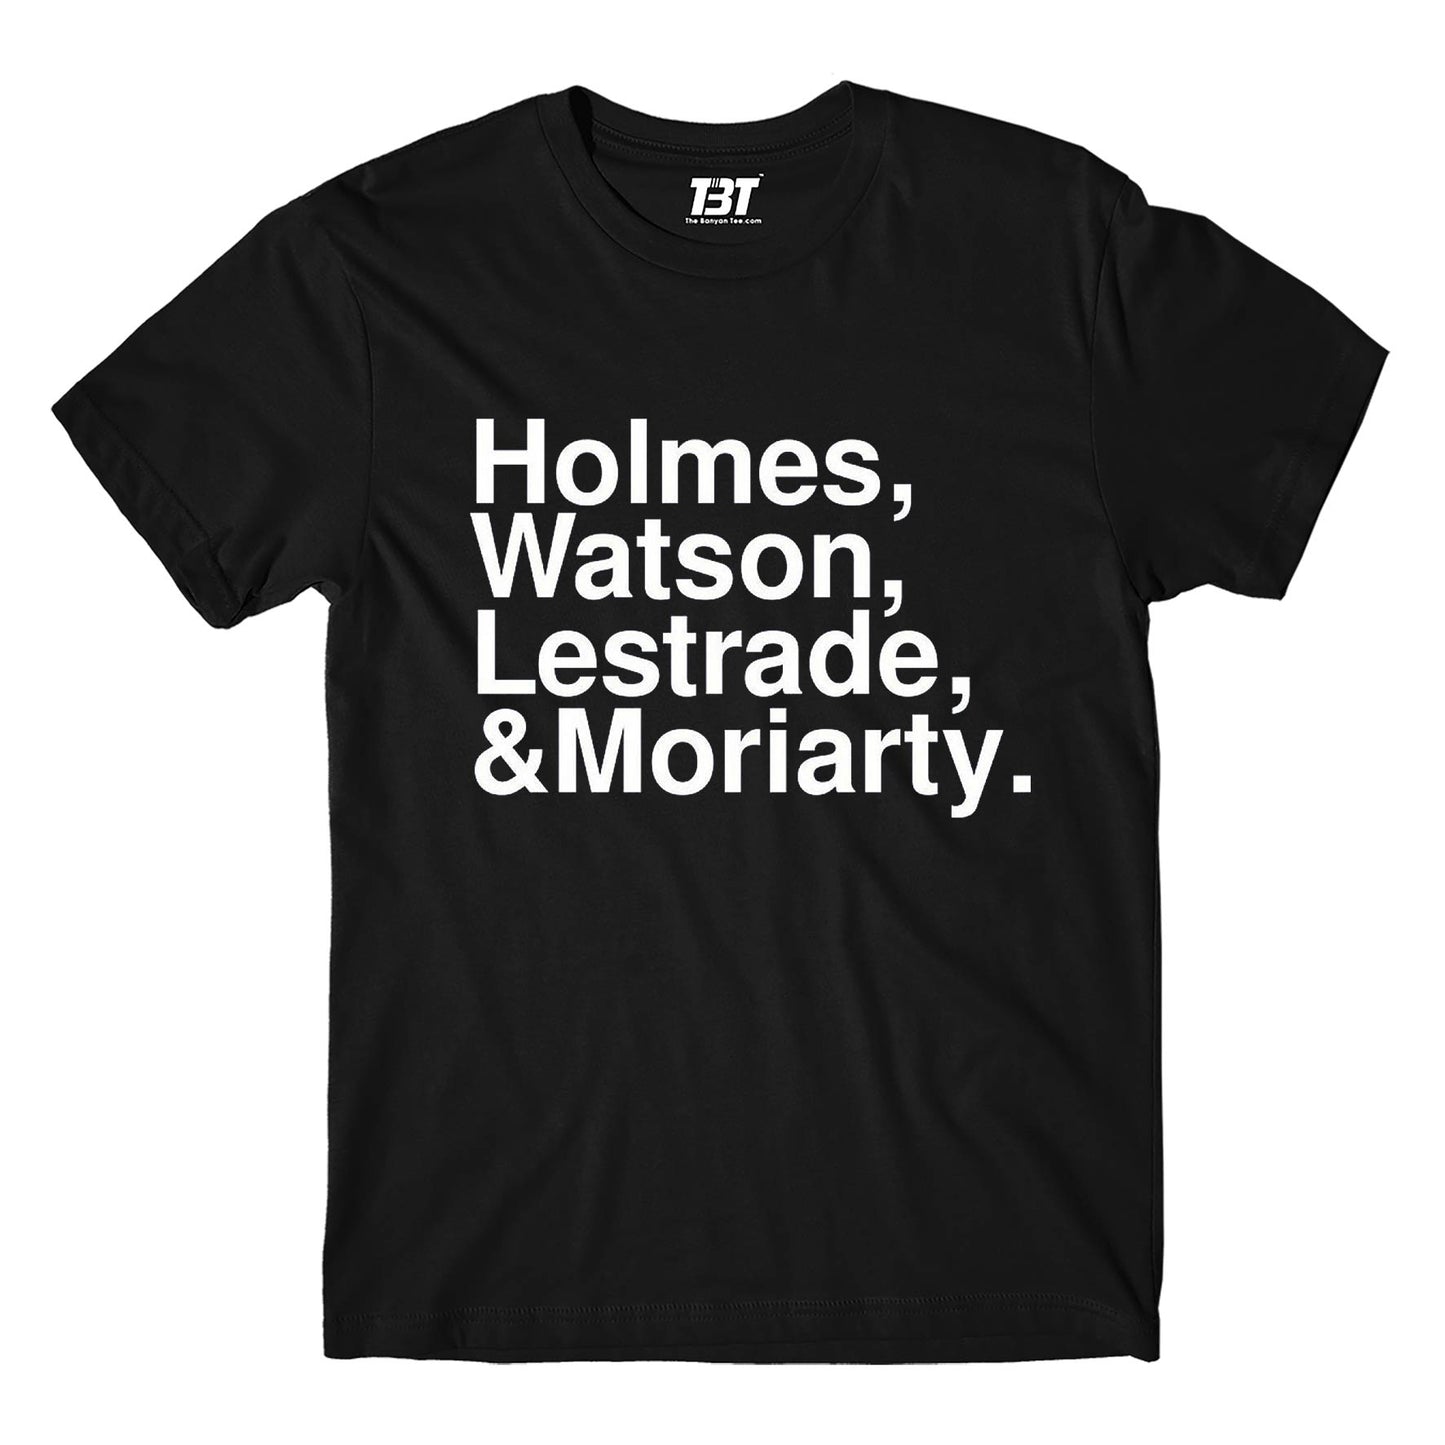 Sherlock T-shirt by The Banyan Tee TBT